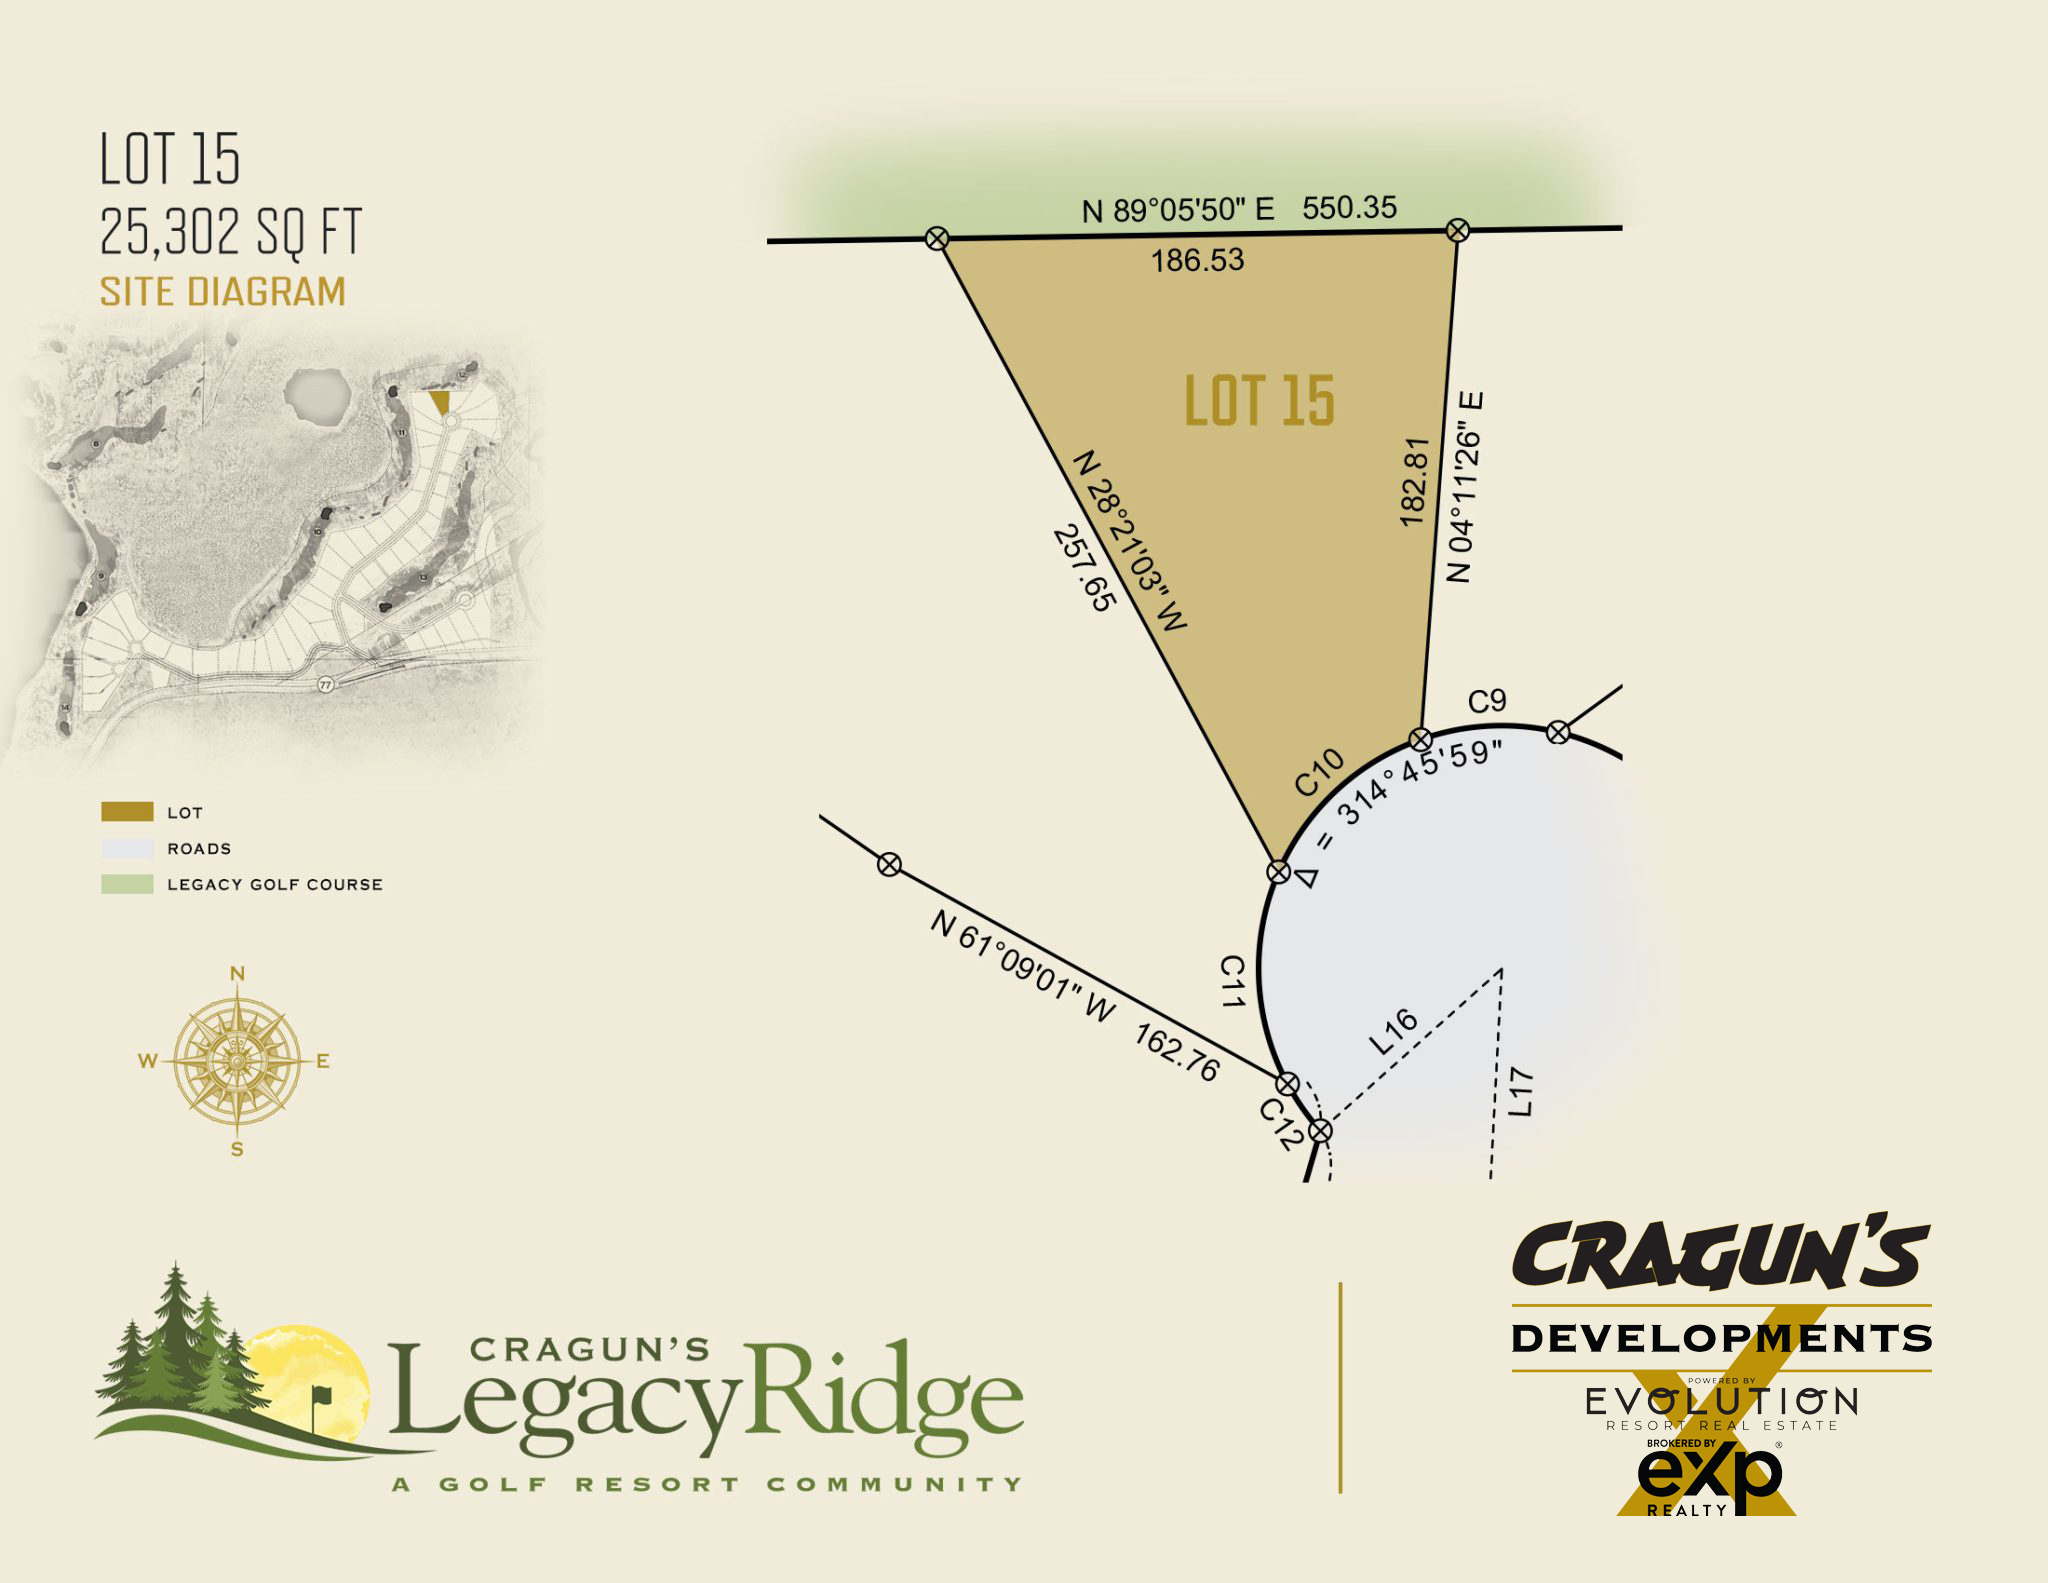 Legacy Ridge Lot 15 at Cragun's Developments in Brainerd, MN